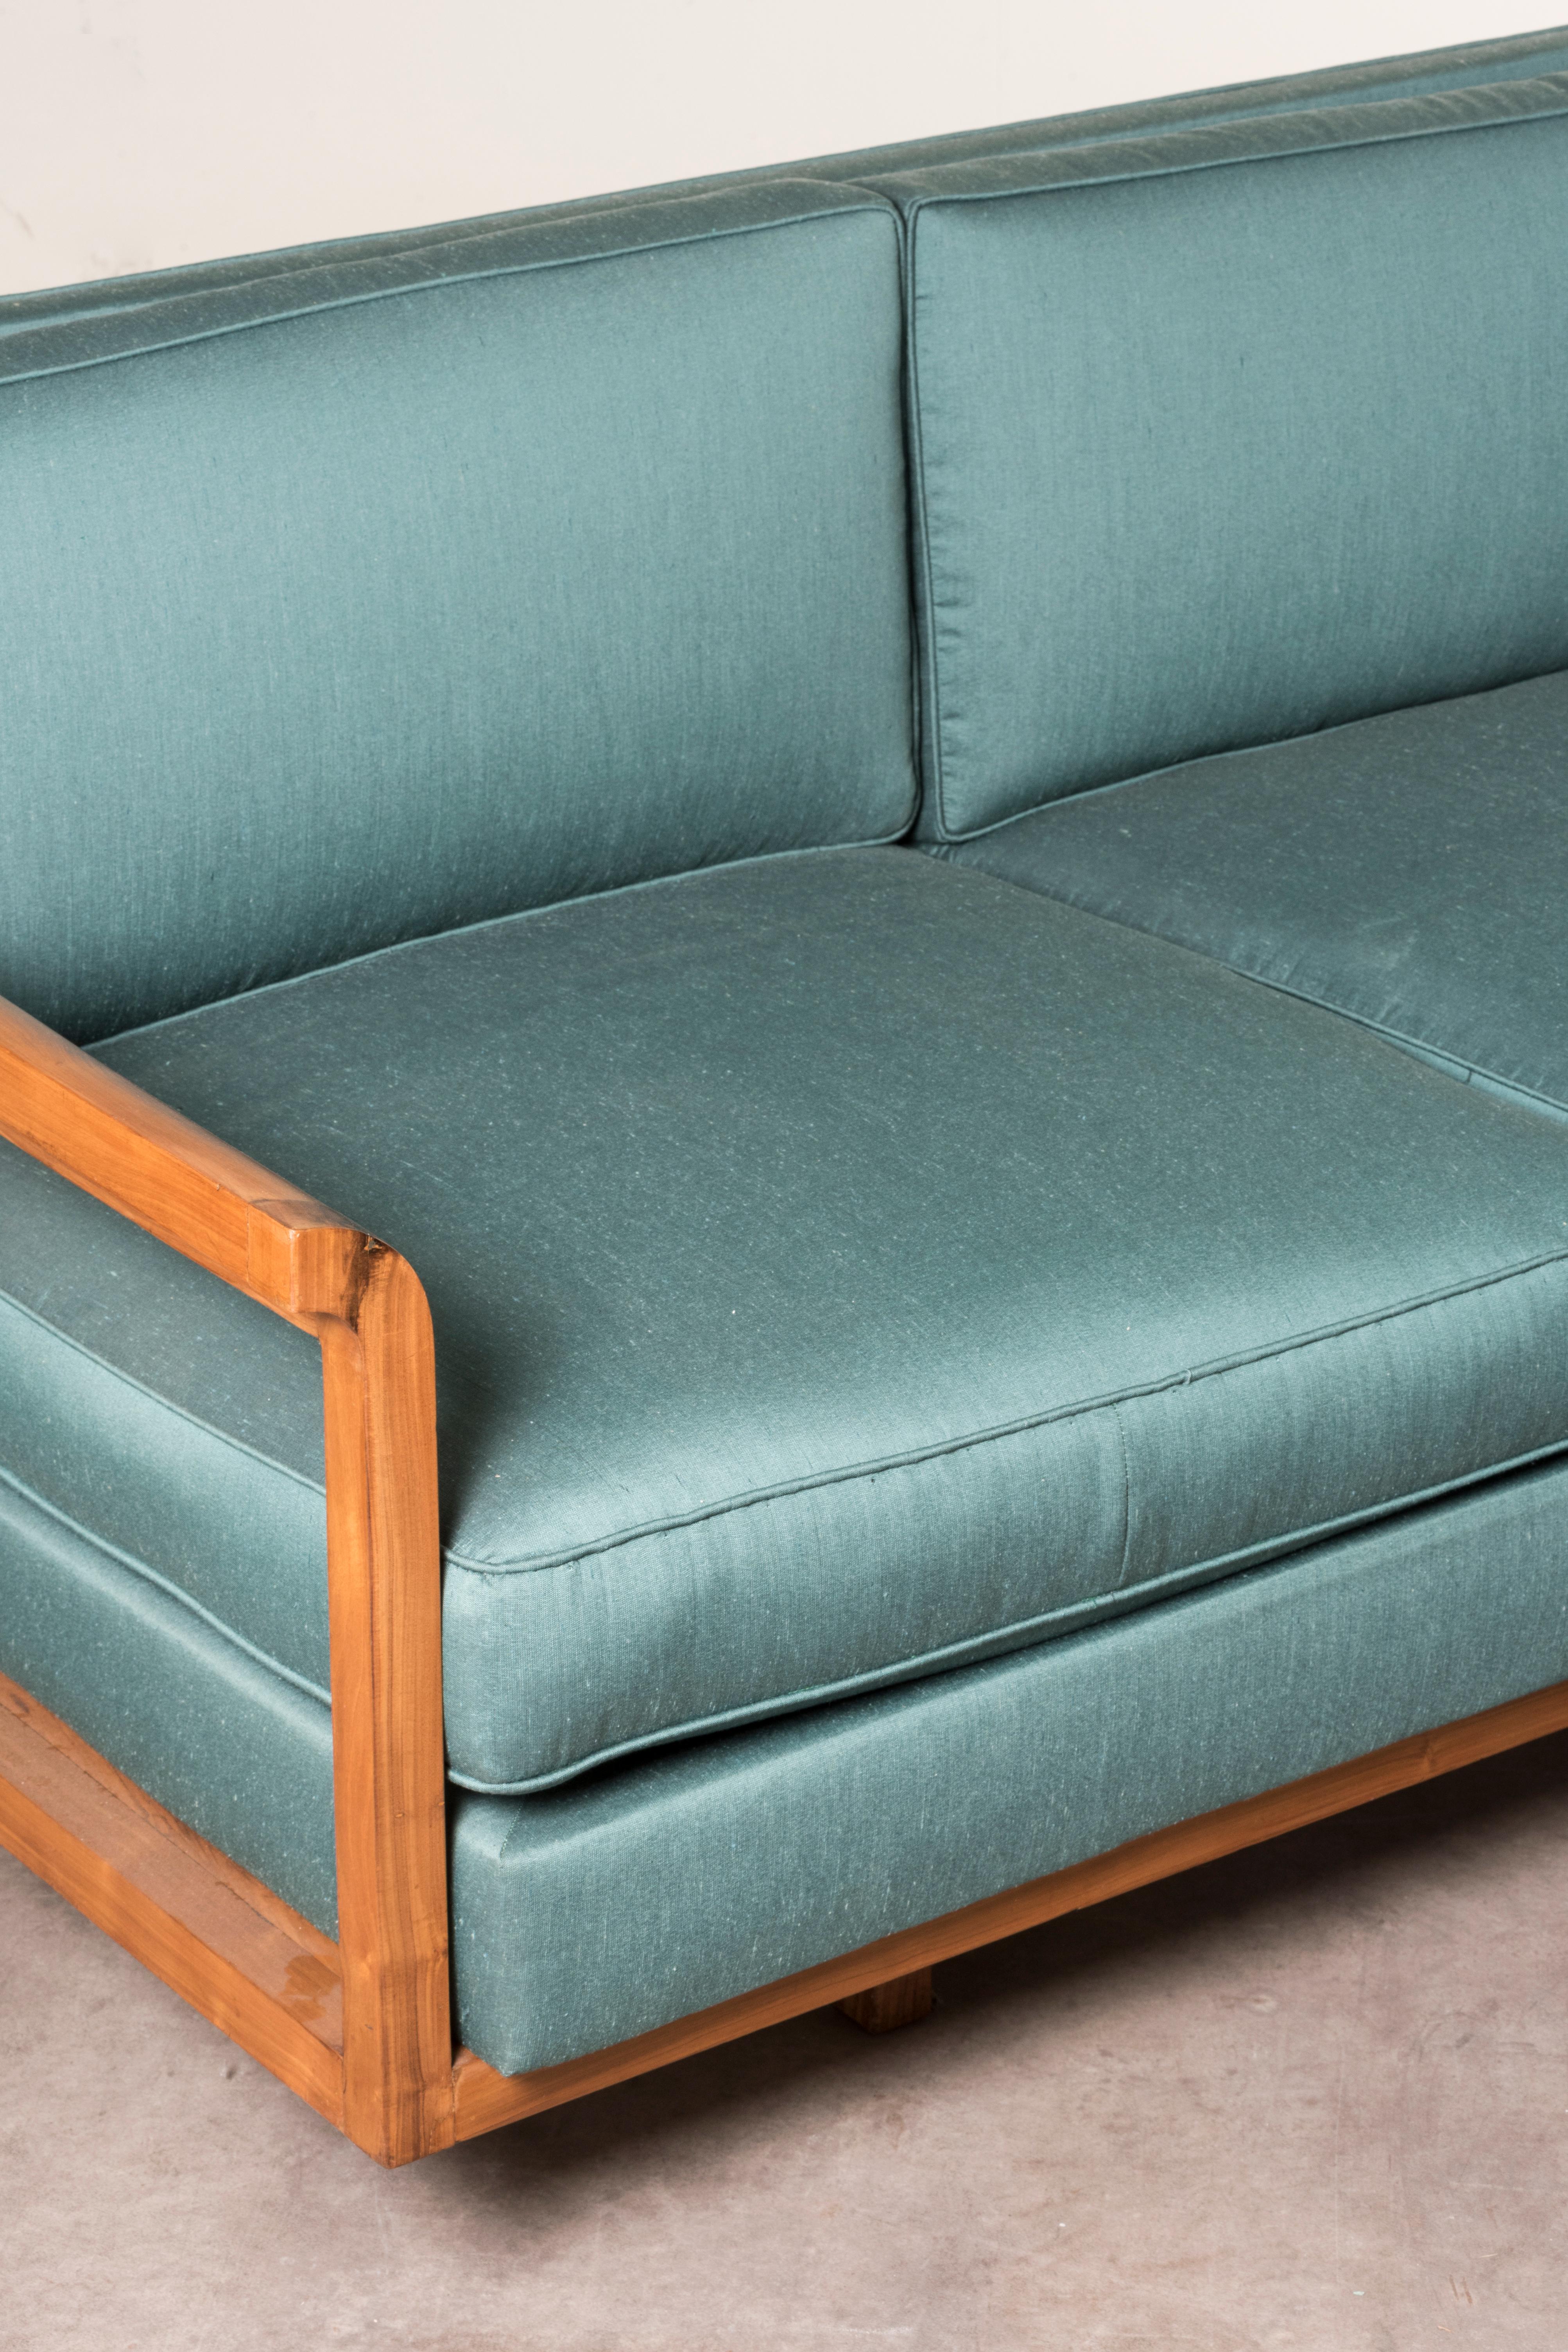 1950 Branco e Preto-Sofa wood fabric upholstery Manufactured by Paubrà For Sale 2